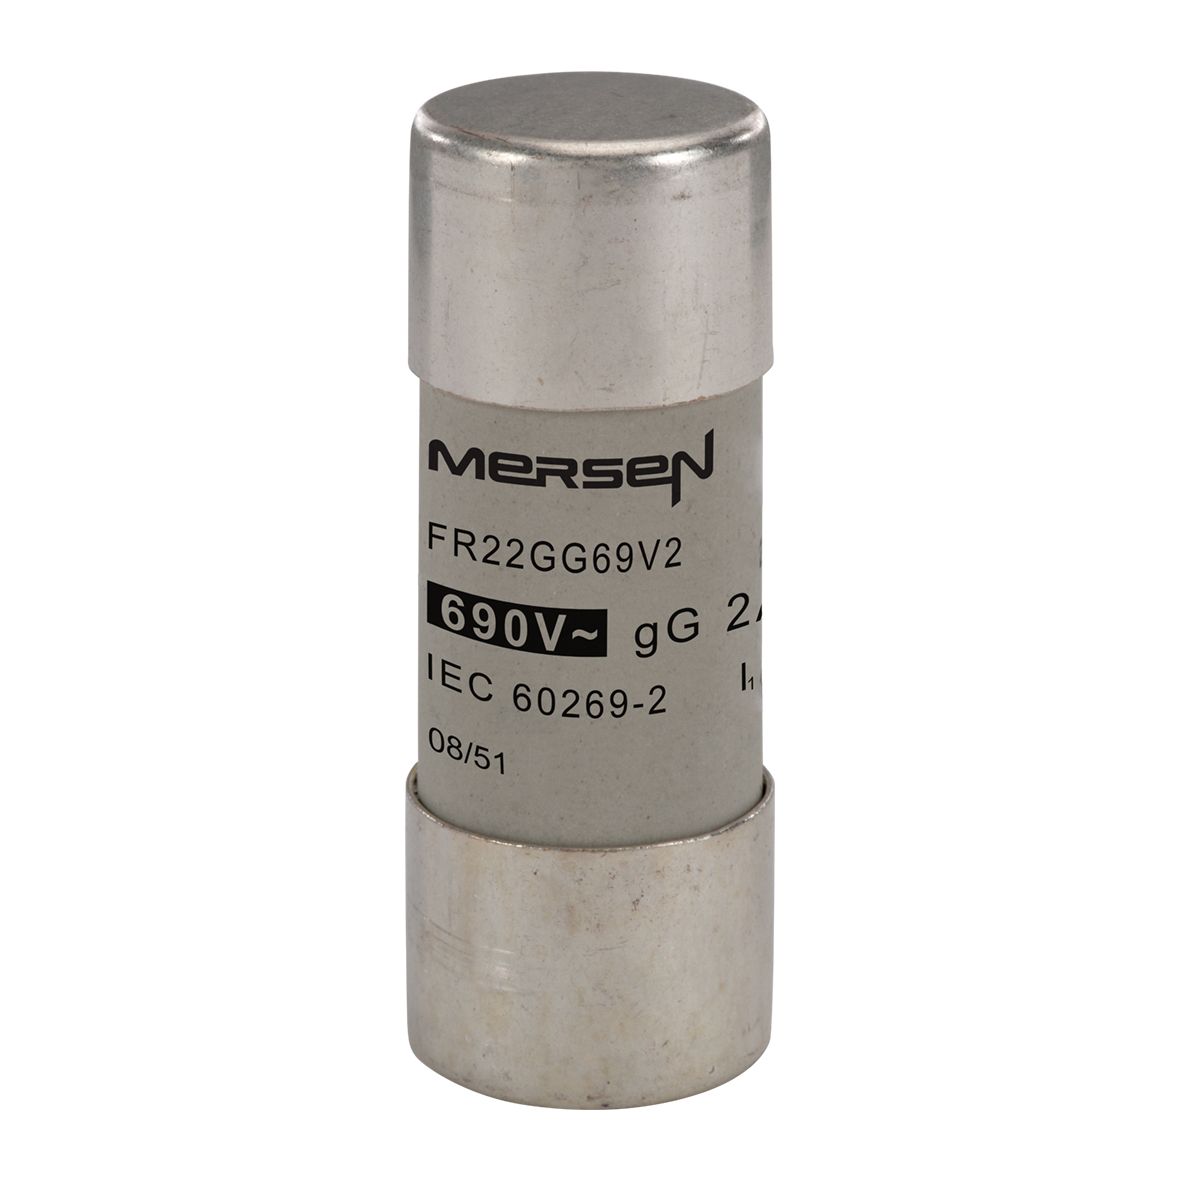 F219241 - Cylindrical fuse-link gG 690VAC 22.2x58, 2A